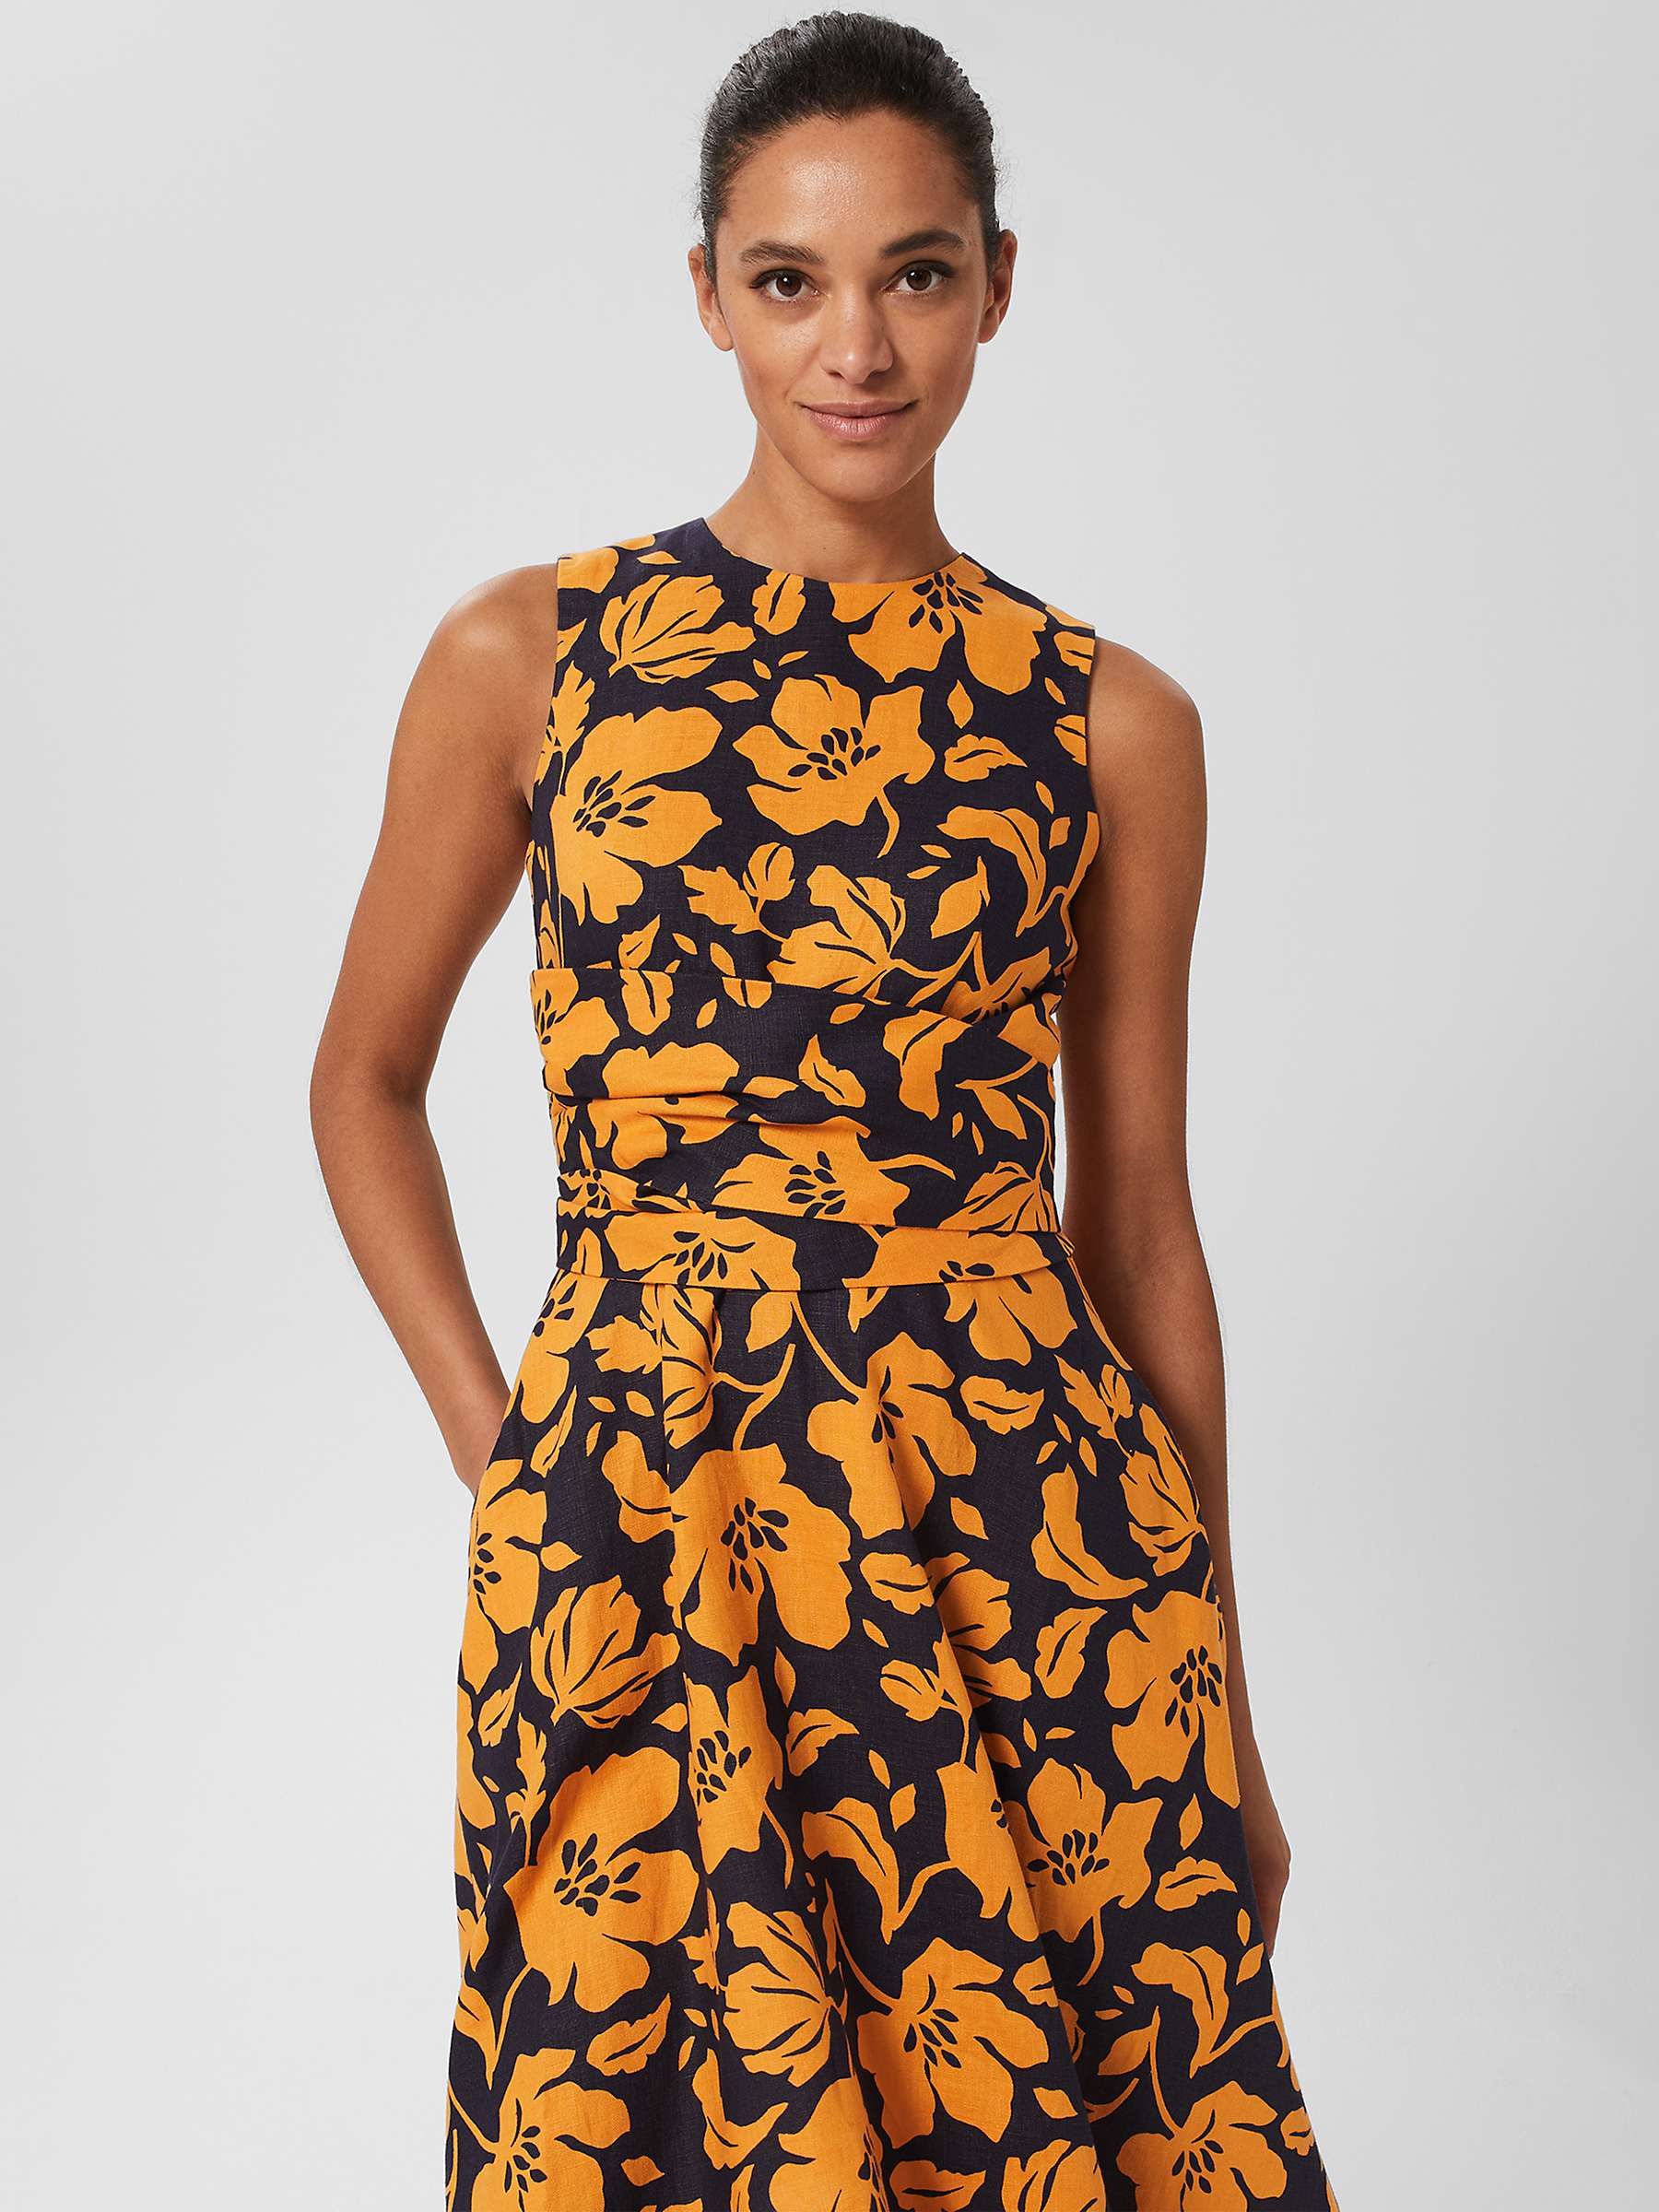 Buy Hobbs Petite Twitchill Floral Print Linen Dress, Navy/Orange Online at johnlewis.com